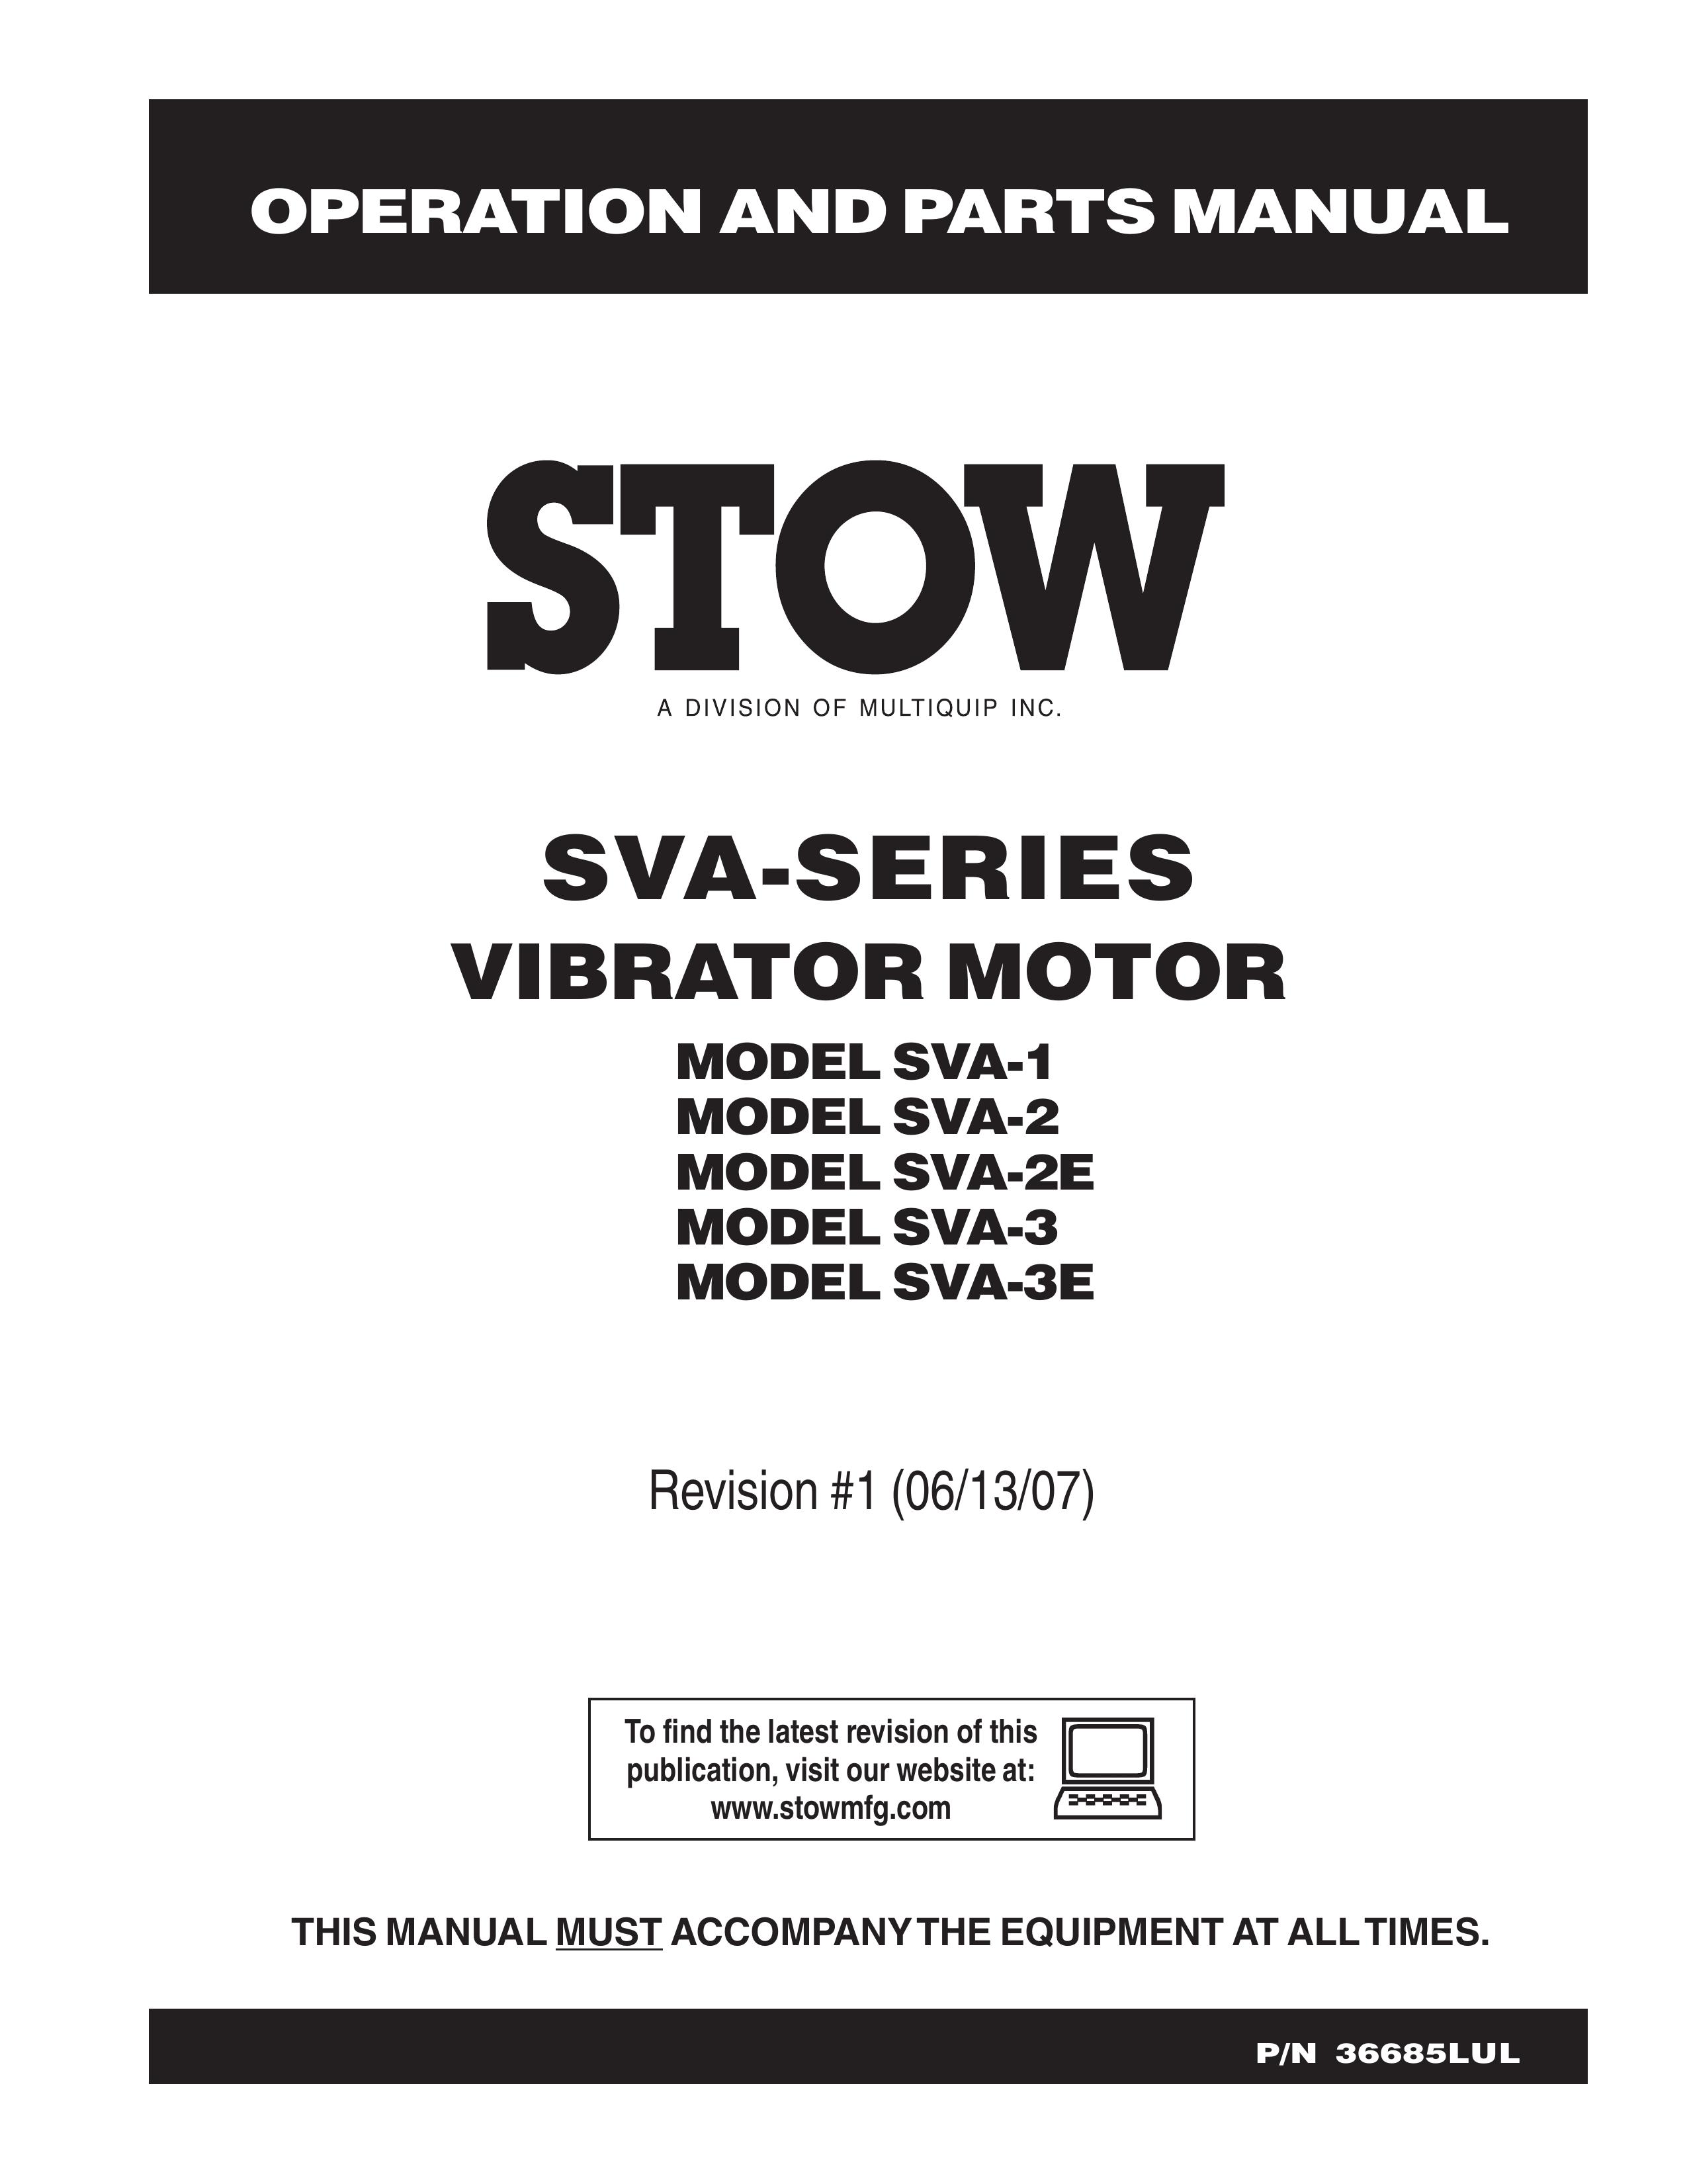 Stow SVA-3E Outboard Motor User Manual